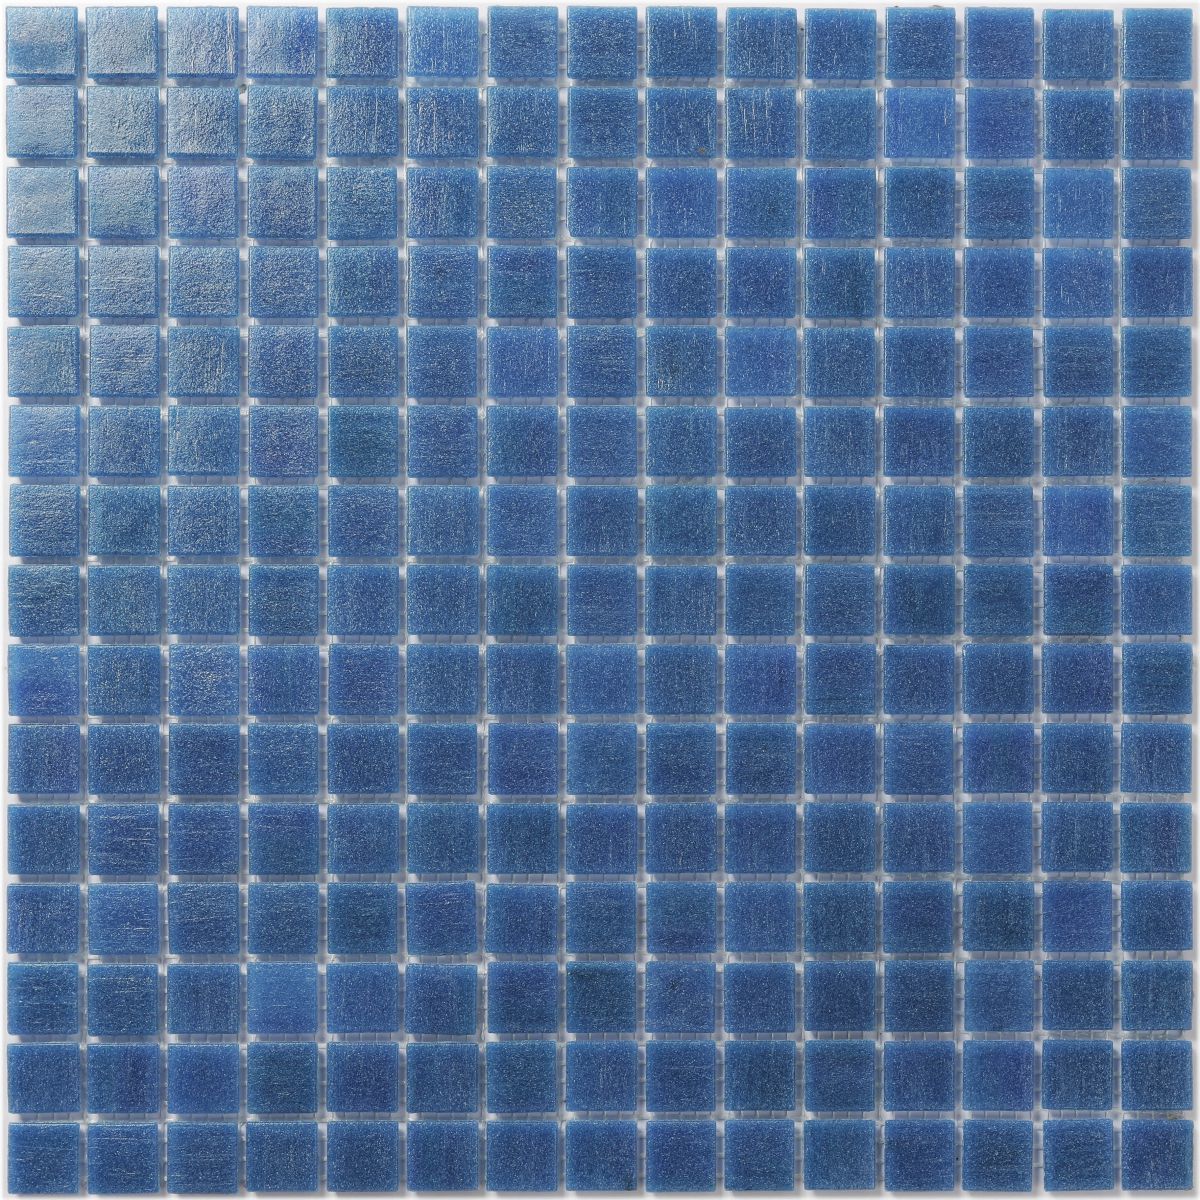 Deep Dark Blue Mosaic Tile for Kitchen Pool Walls 